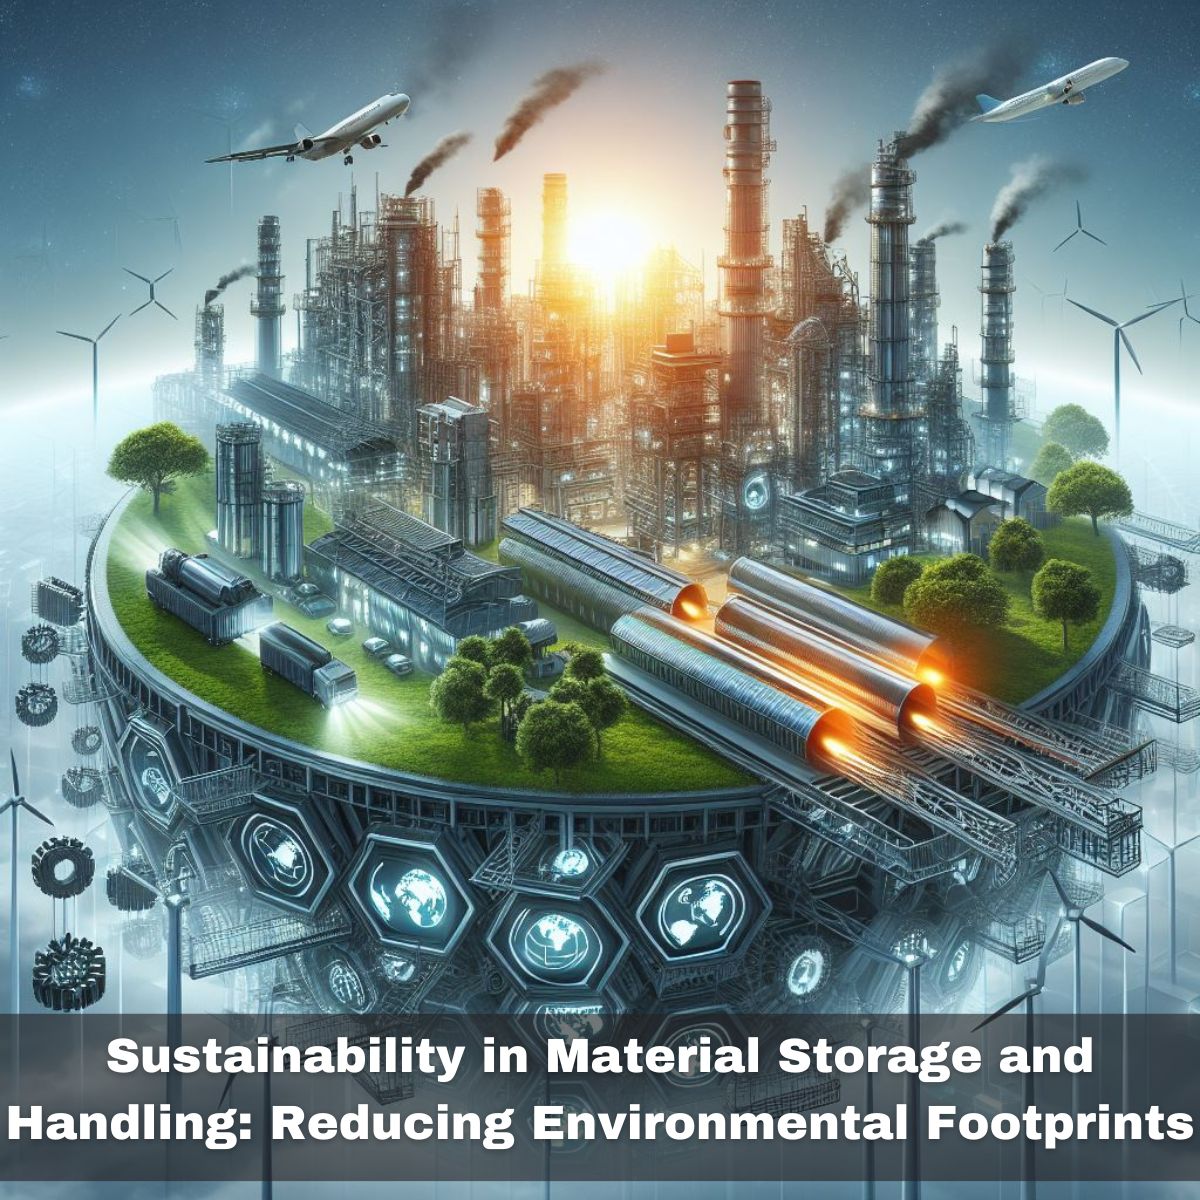 Reducing Environmental Footprints through Material Storage and Handling - MH&More